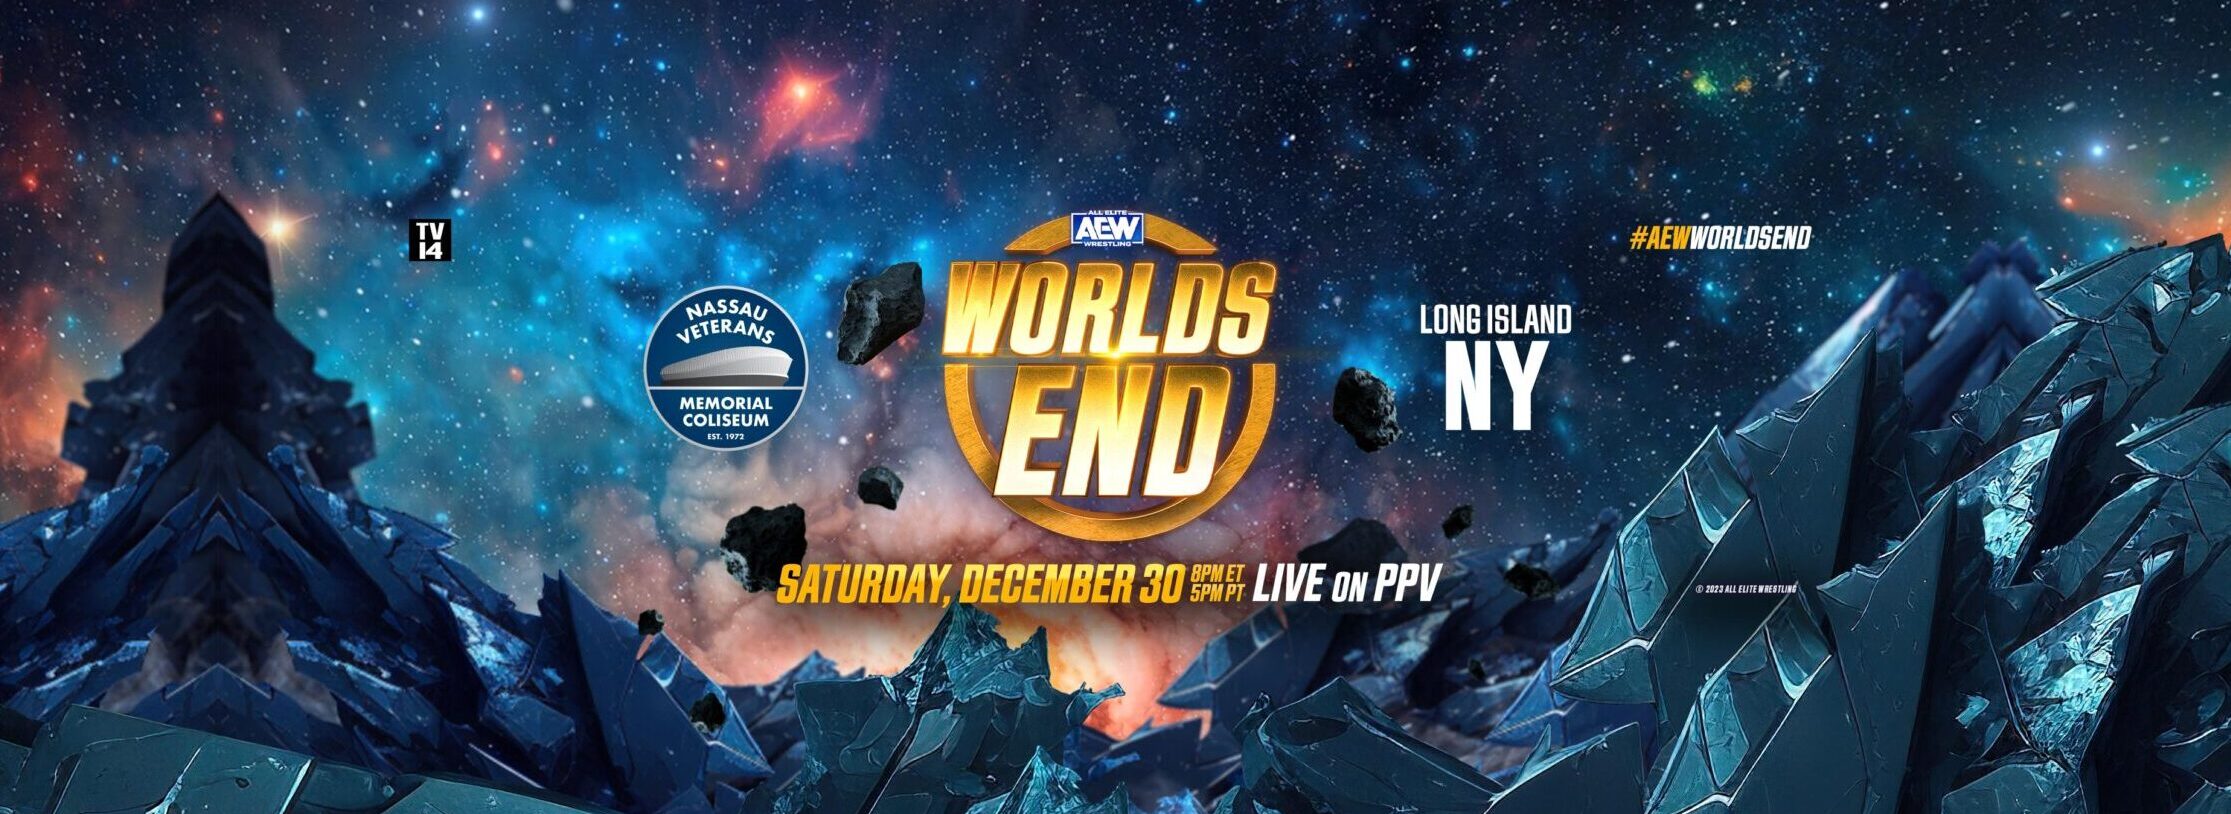 AEW Worlds End Joe Hand Promotions